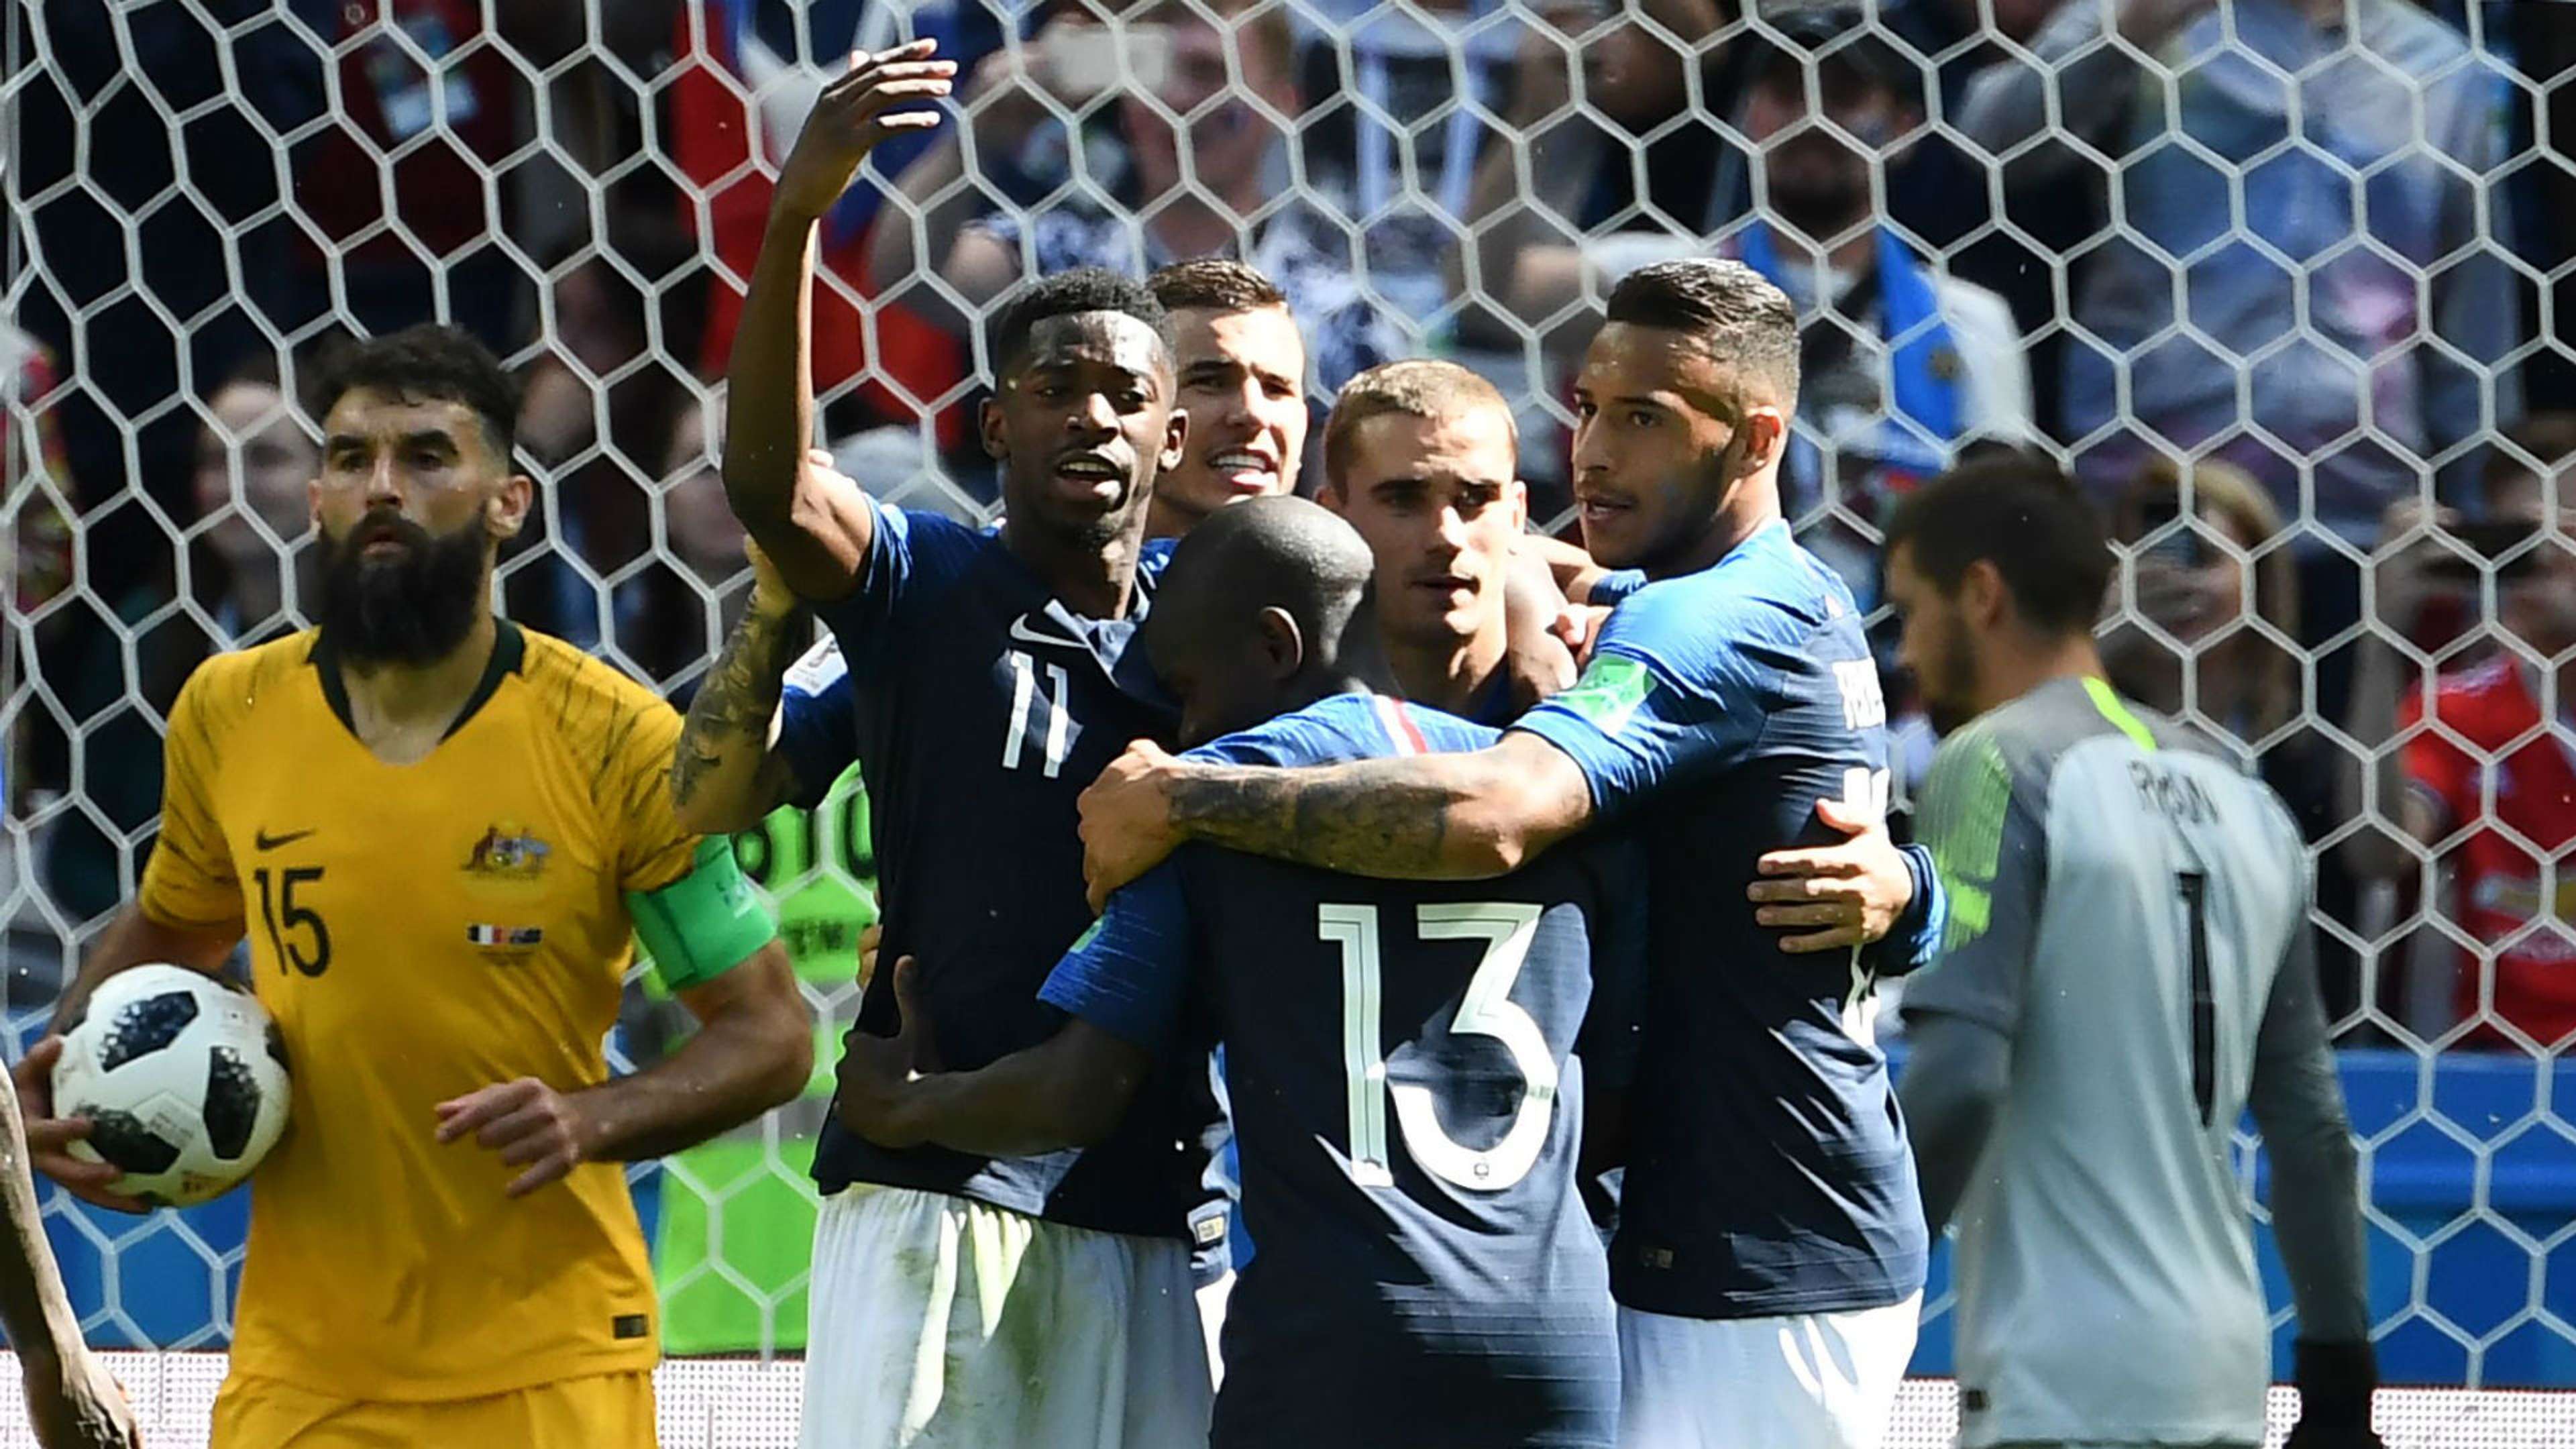 France celebration Paul Pogba goal France Australia World Cup 2018 16062018.jpg